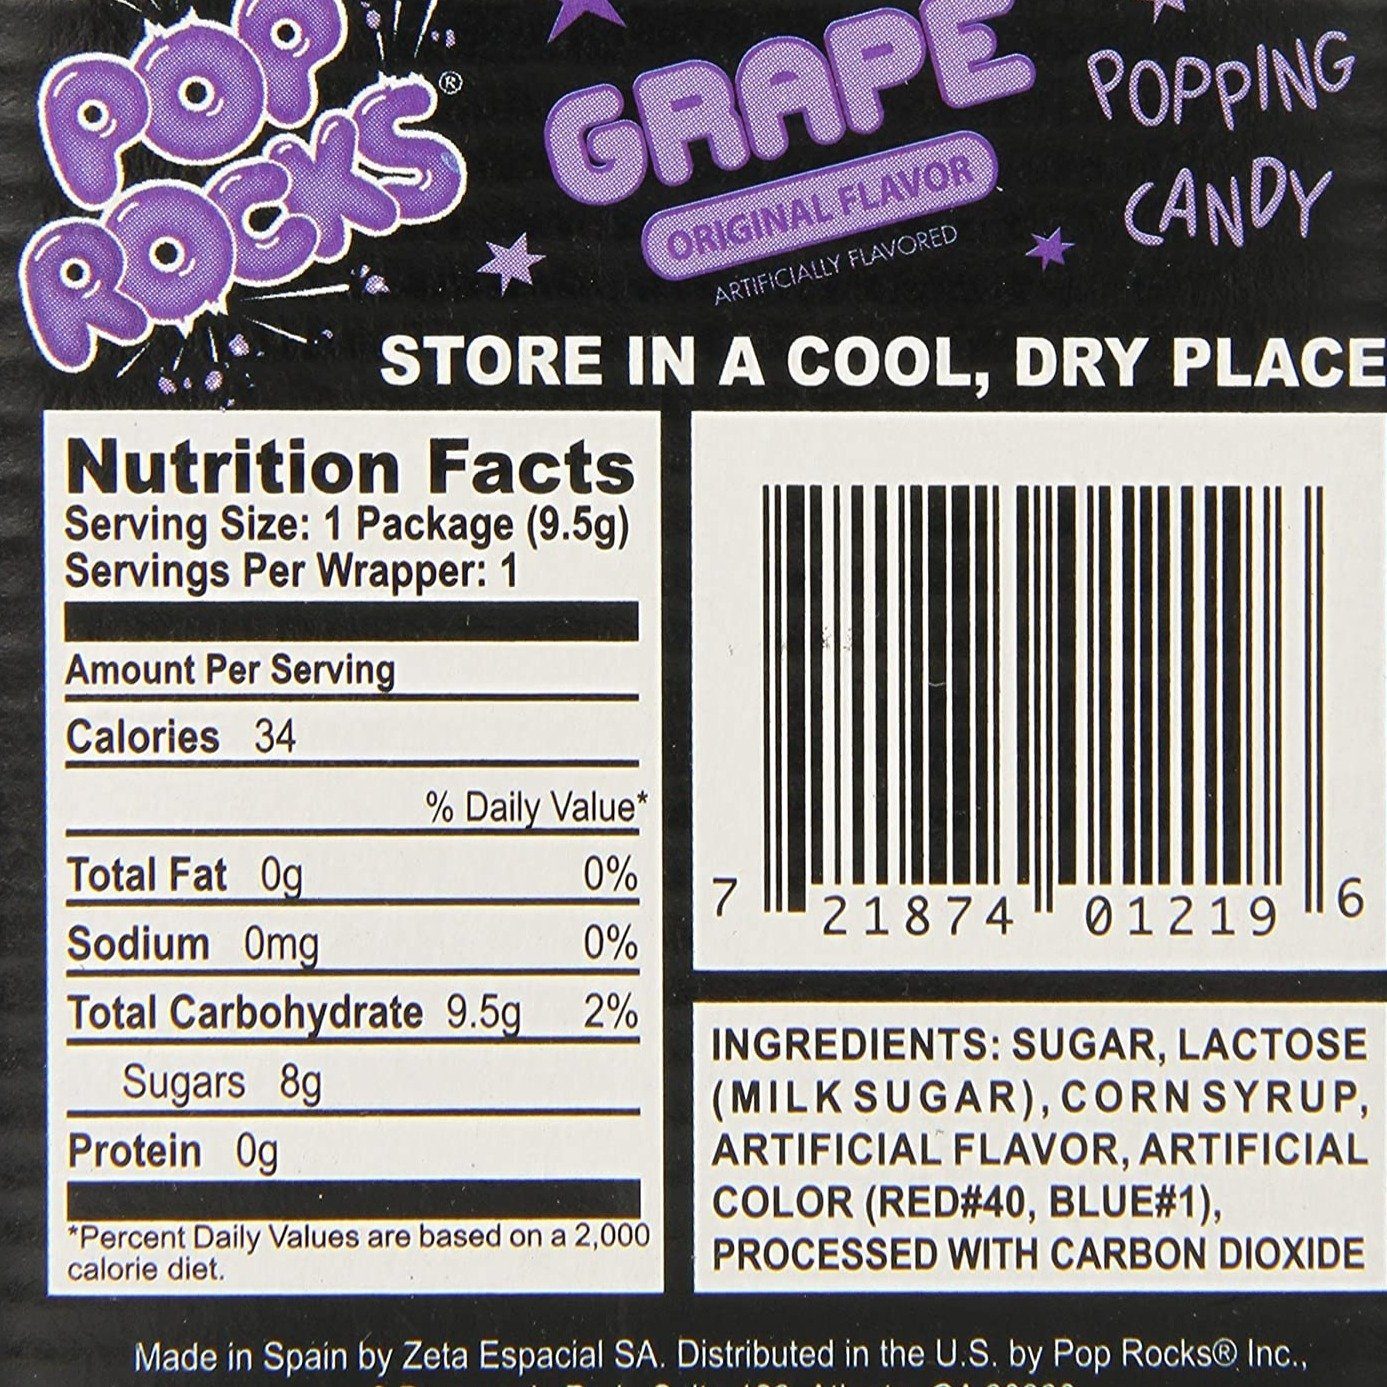 Grape Candy Pop Rocks Candy Candy & Chocolate MoxyMavenStudio 